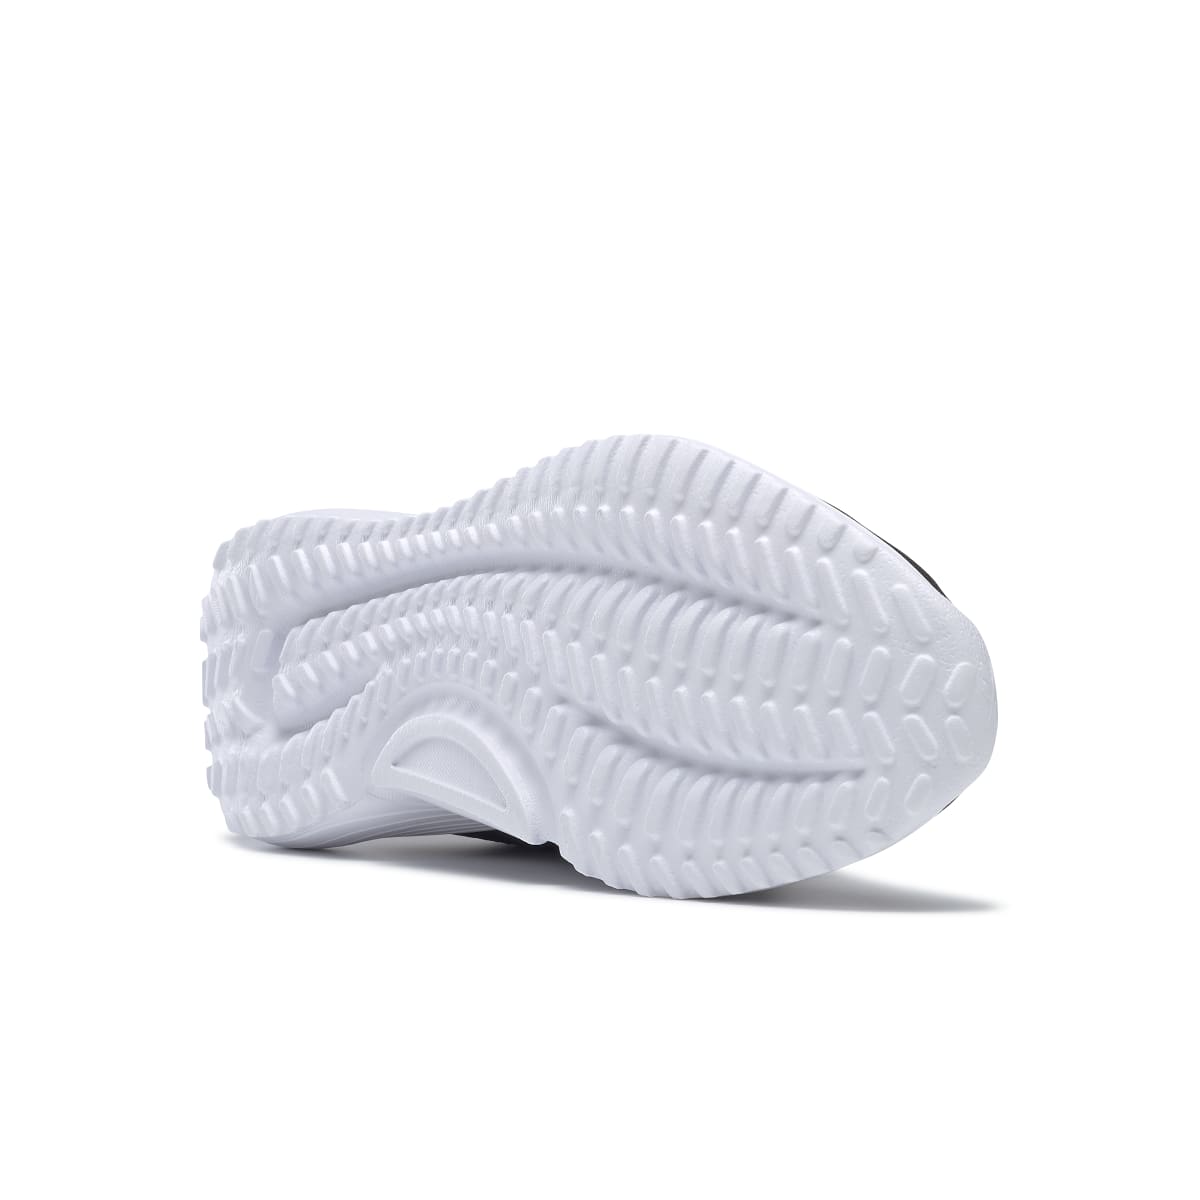 REEBOK GY0156 LITE 3.0 WMN'S (Medium) Black/White/Black Textile Running Shoes